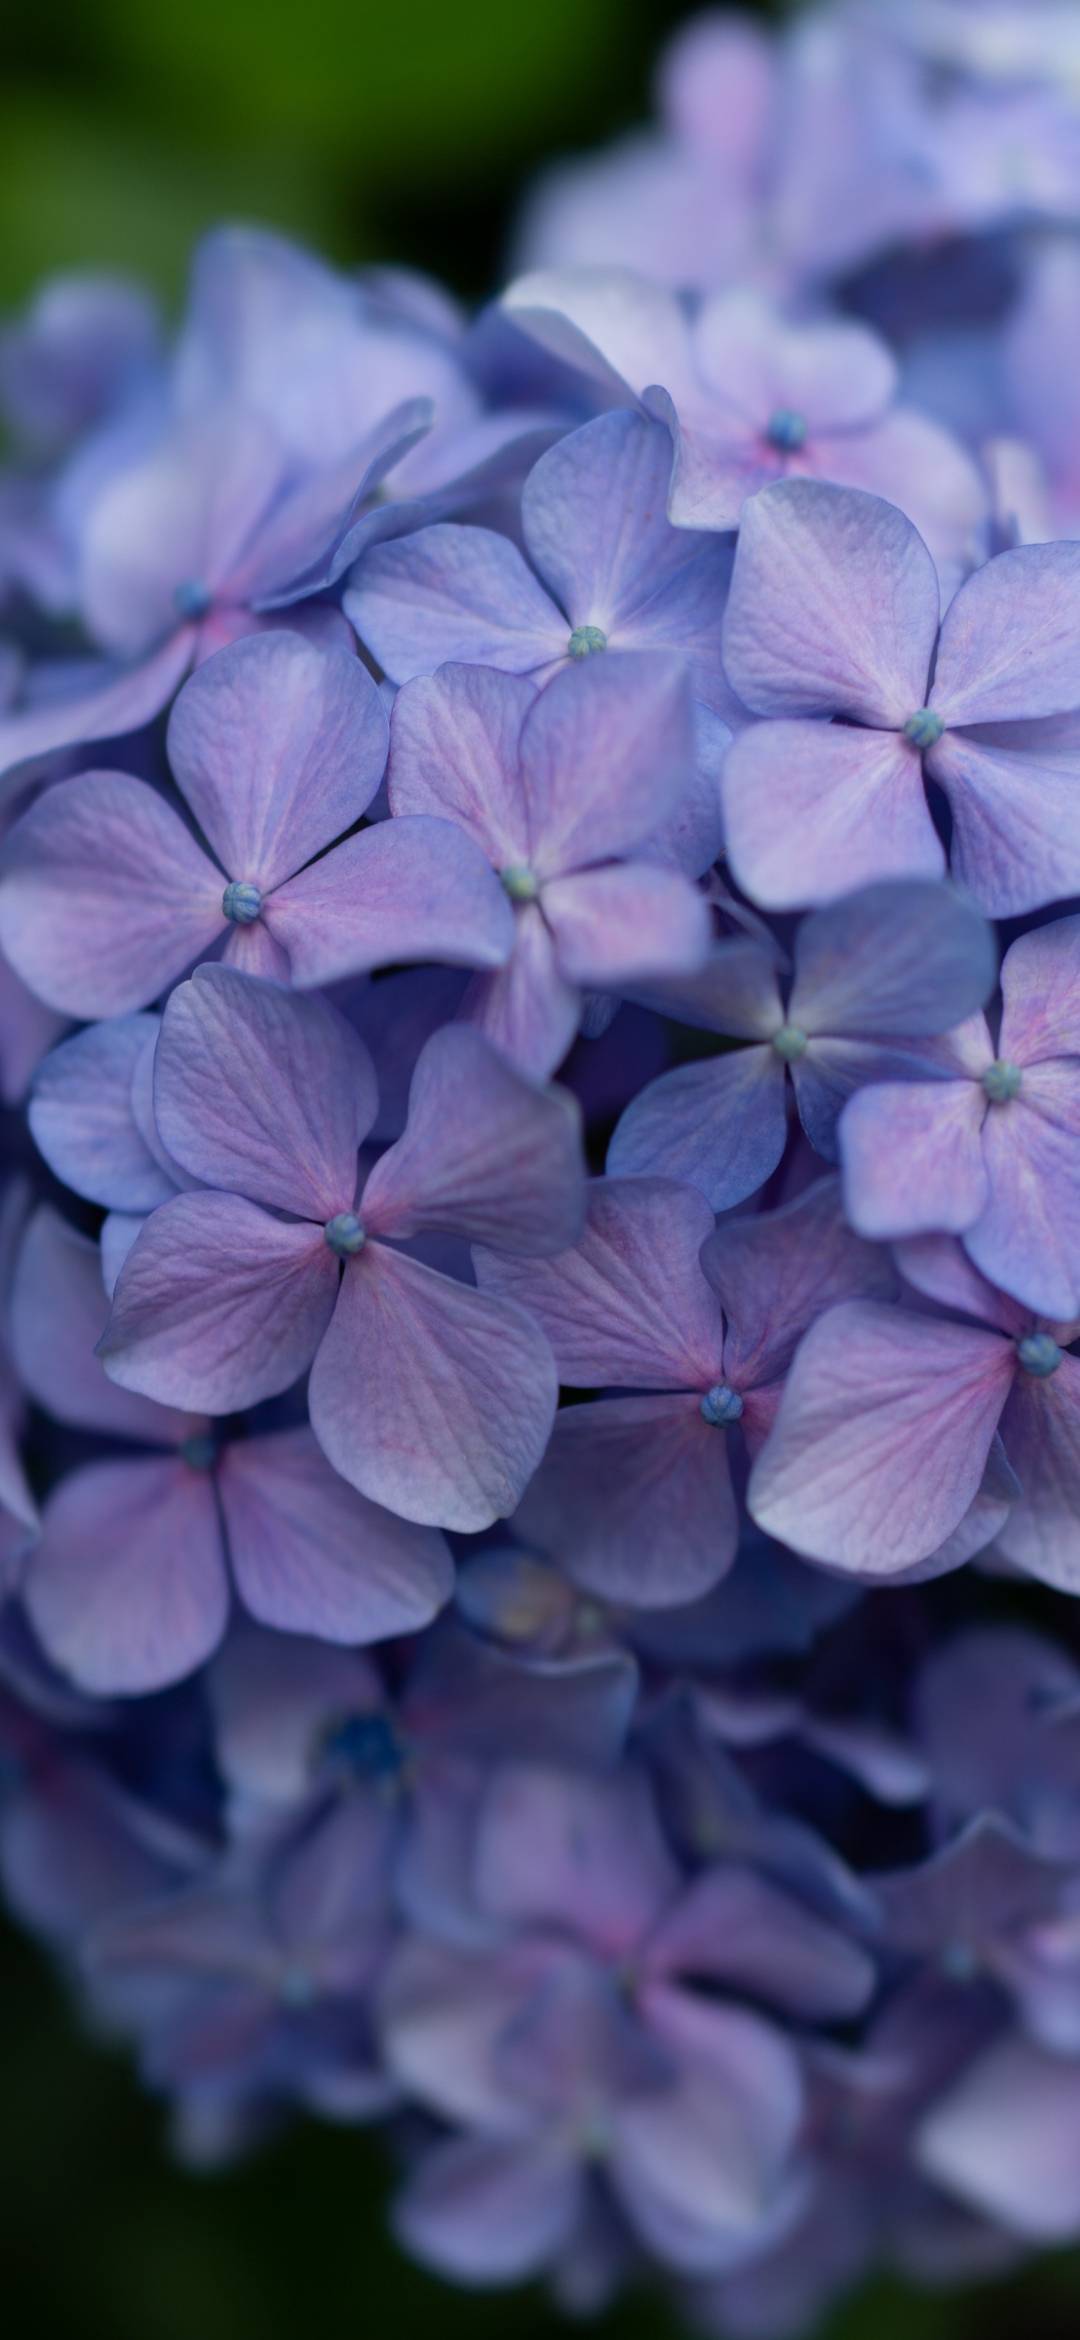 50,000+ Light Flower Pictures | Download Free Images on Unsplash